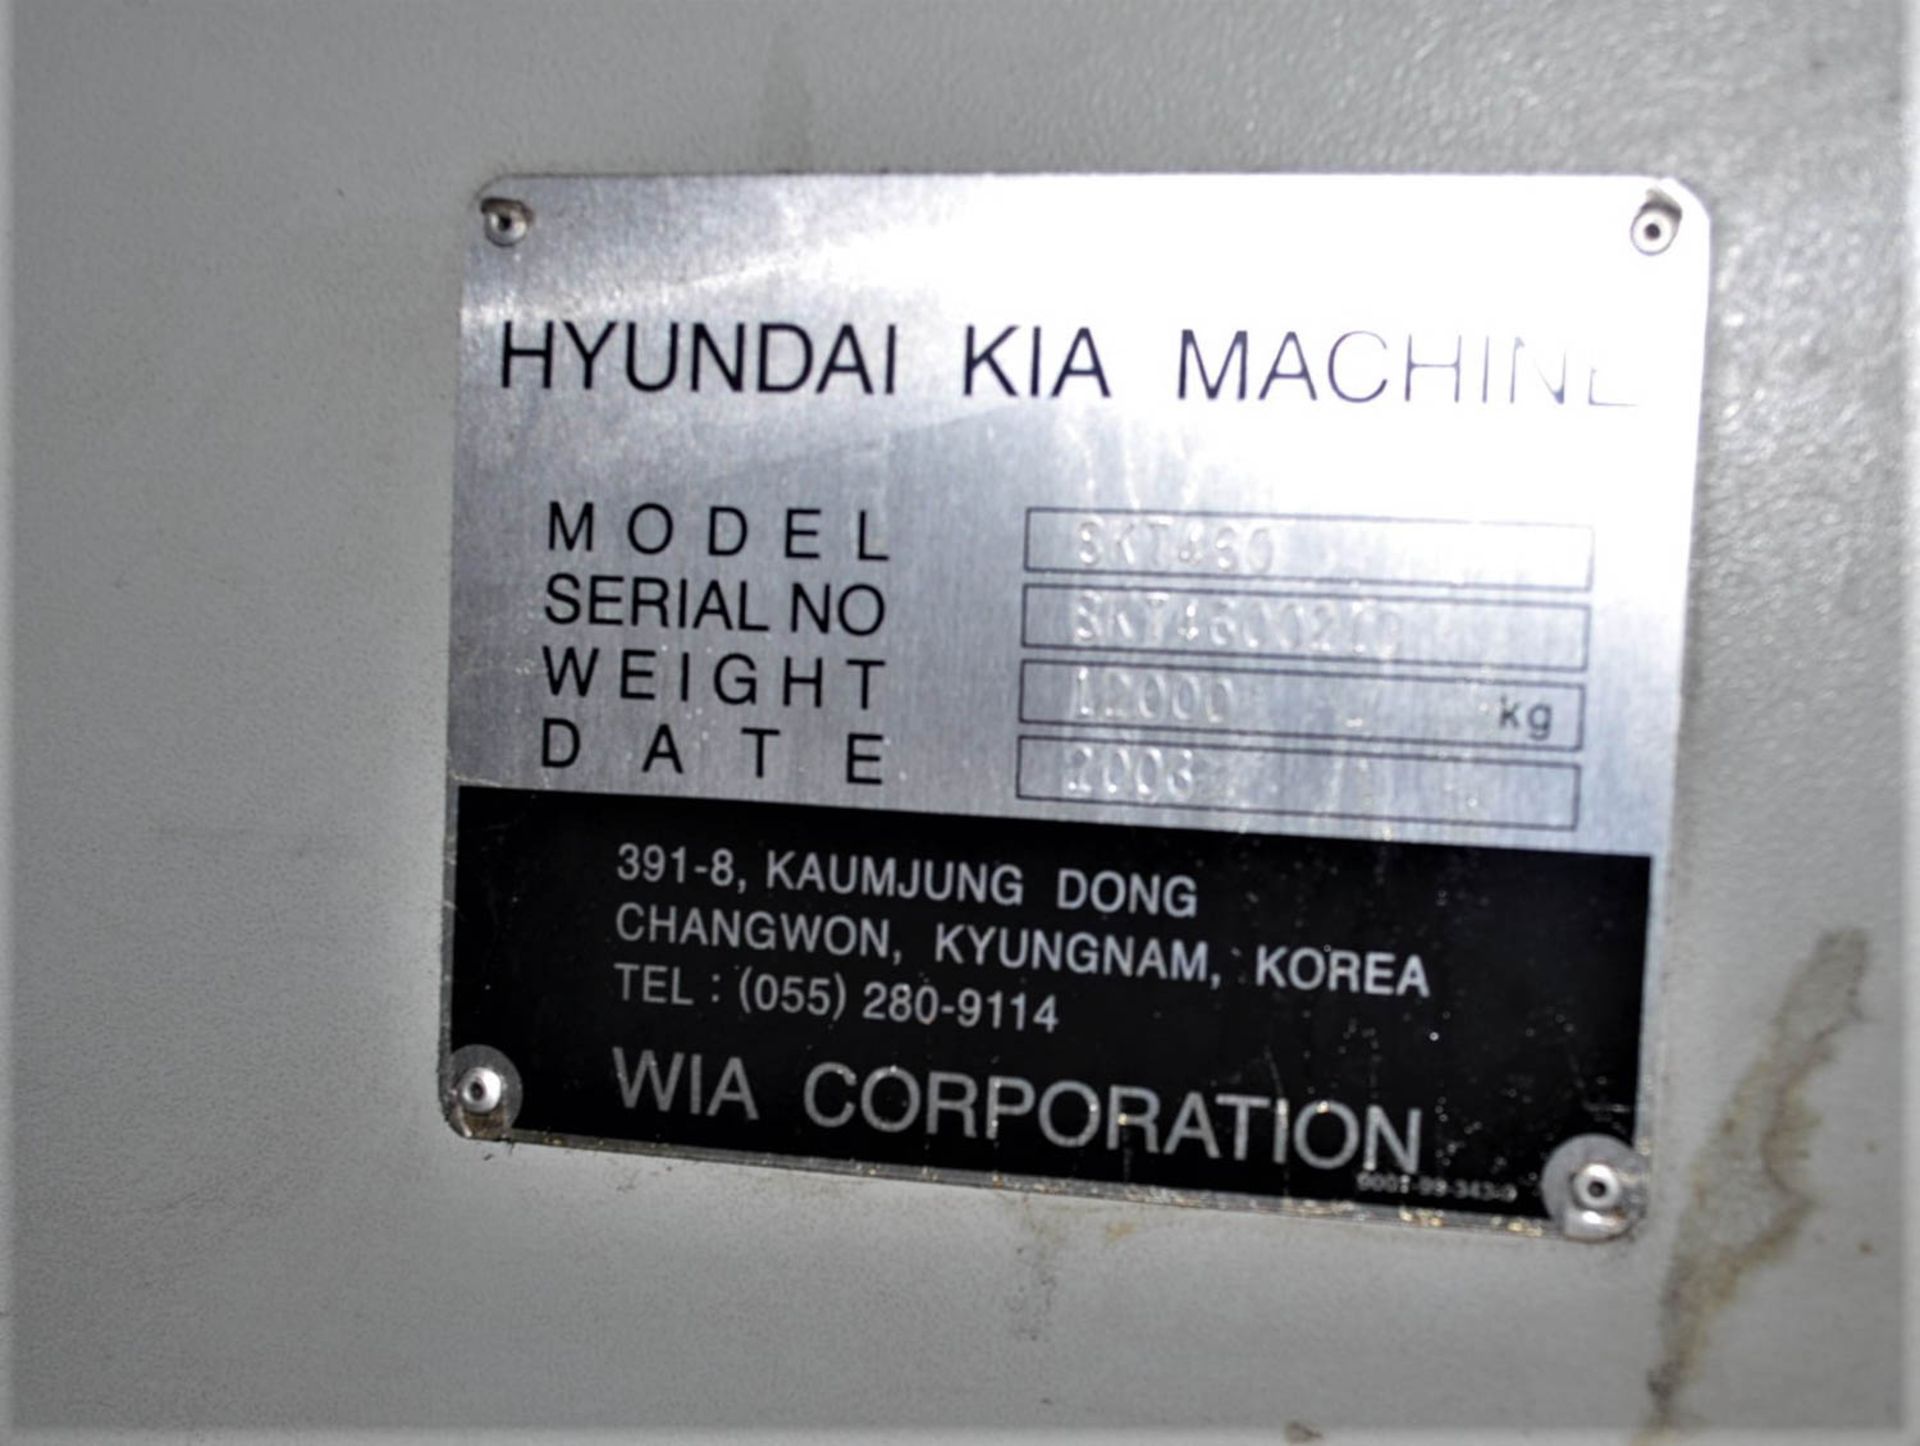 HYUNDAI KIA MDL. SKT-460 CNC TURNING CENTER, WITH FANUC 21iTB CNC CONTROL, 34.5" SWING, 62" MAX - Image 7 of 9